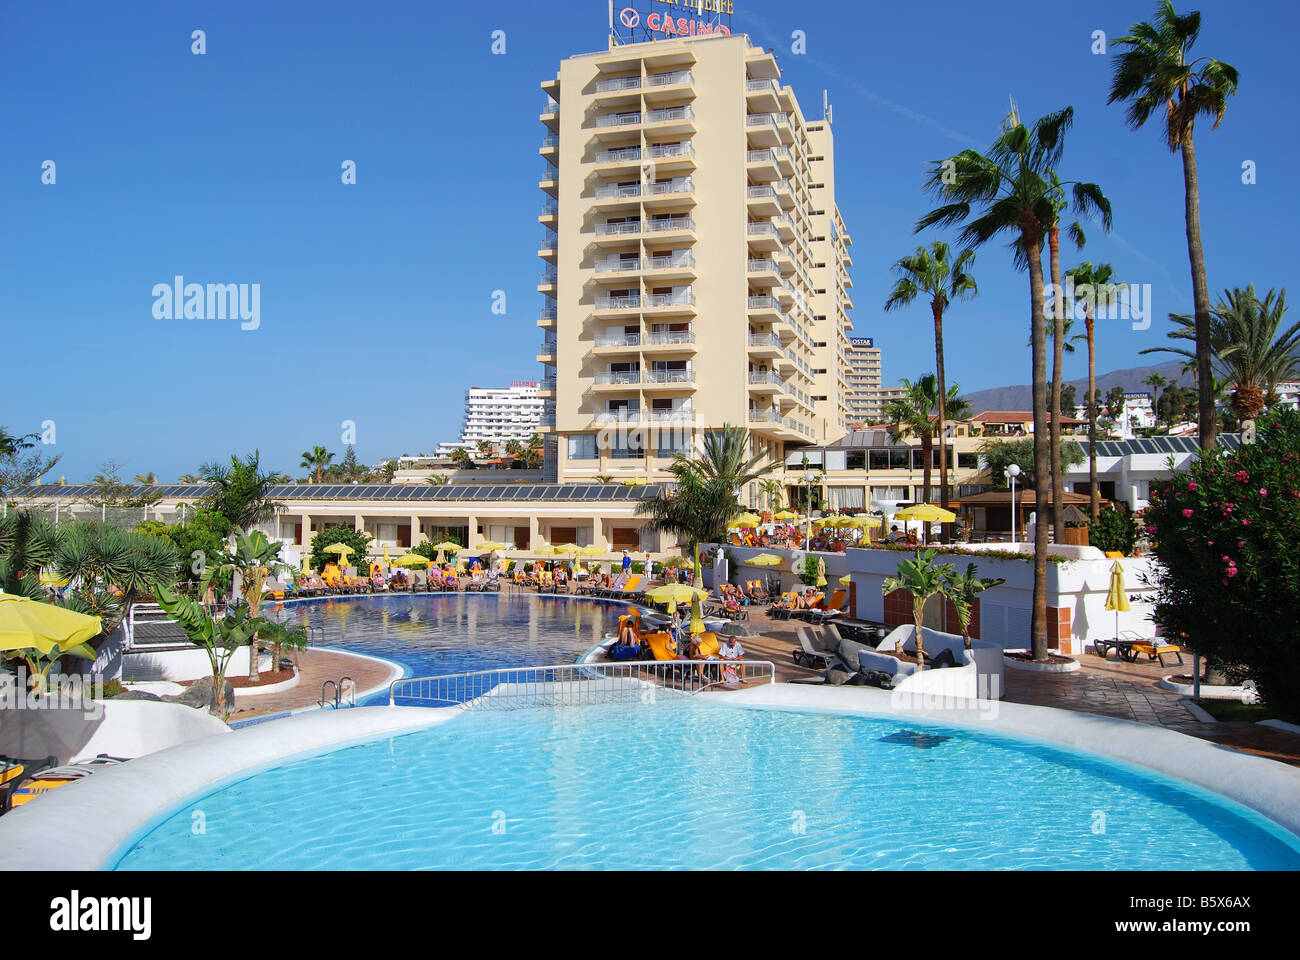 Hotel H10 Gran Tinerfe, Costa Adeje, Tenerife, Canaries, Espagne Banque D'Images